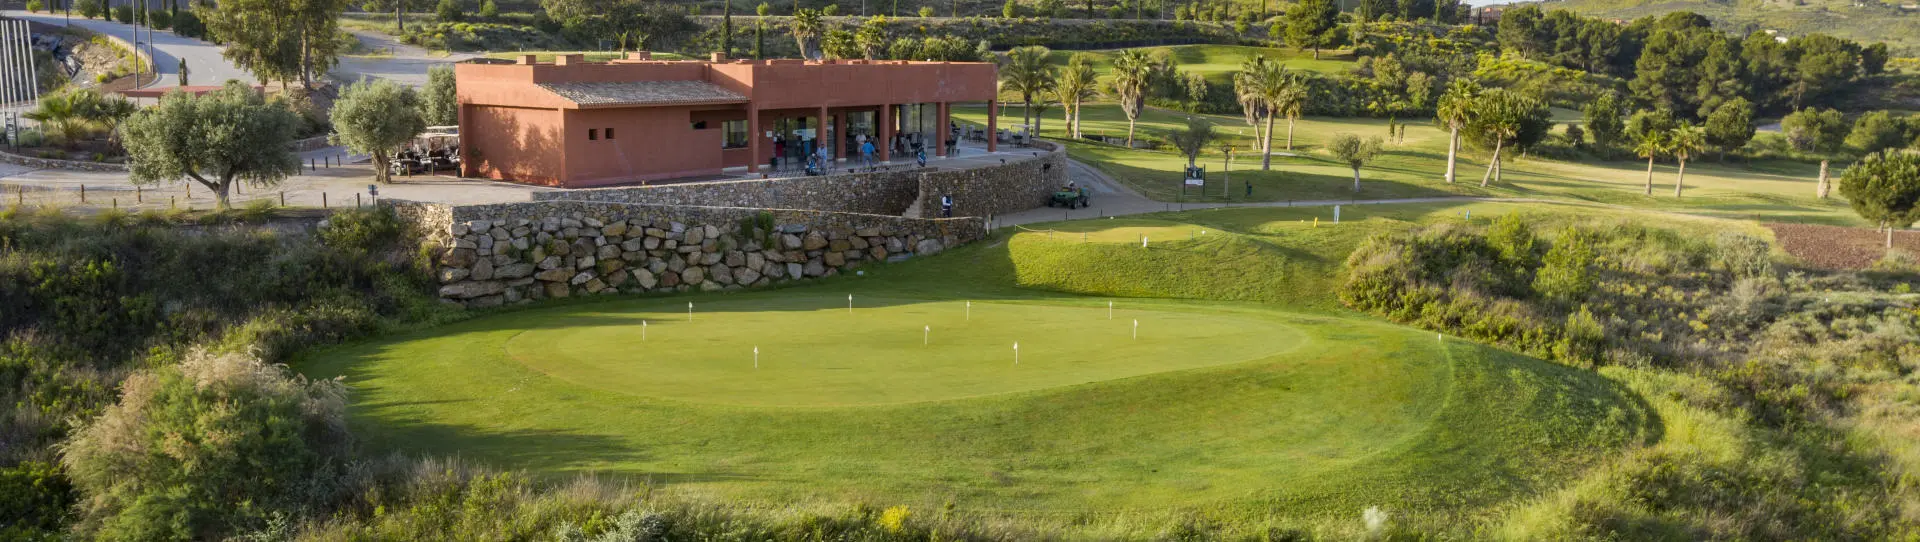 Spain golf courses - Lorca Golf Course - Photo 3